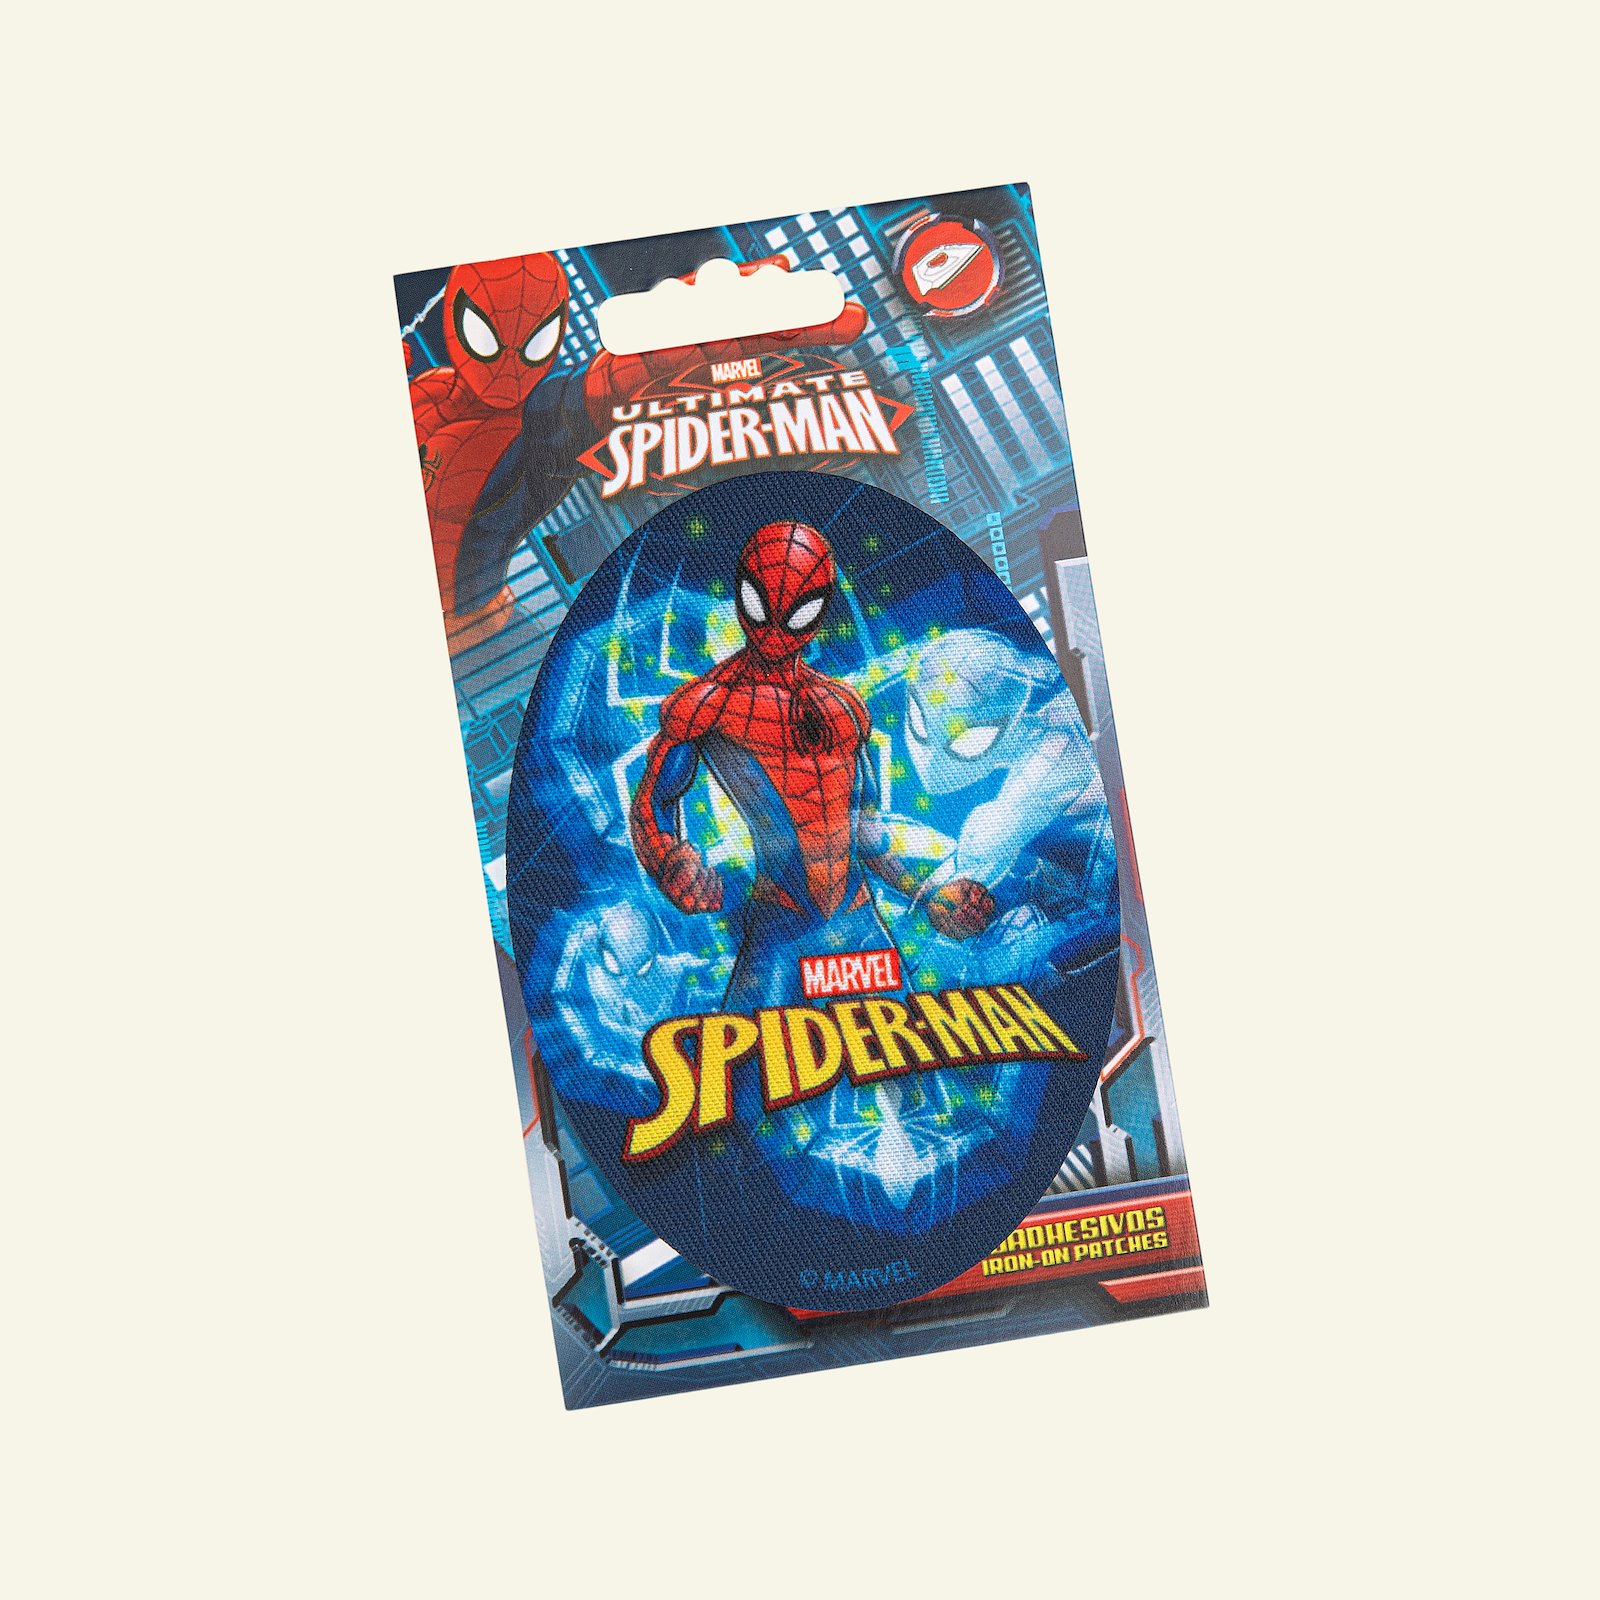 Symærke Spiderman 110x80mm blå/rød 1stk 24951_pack_b